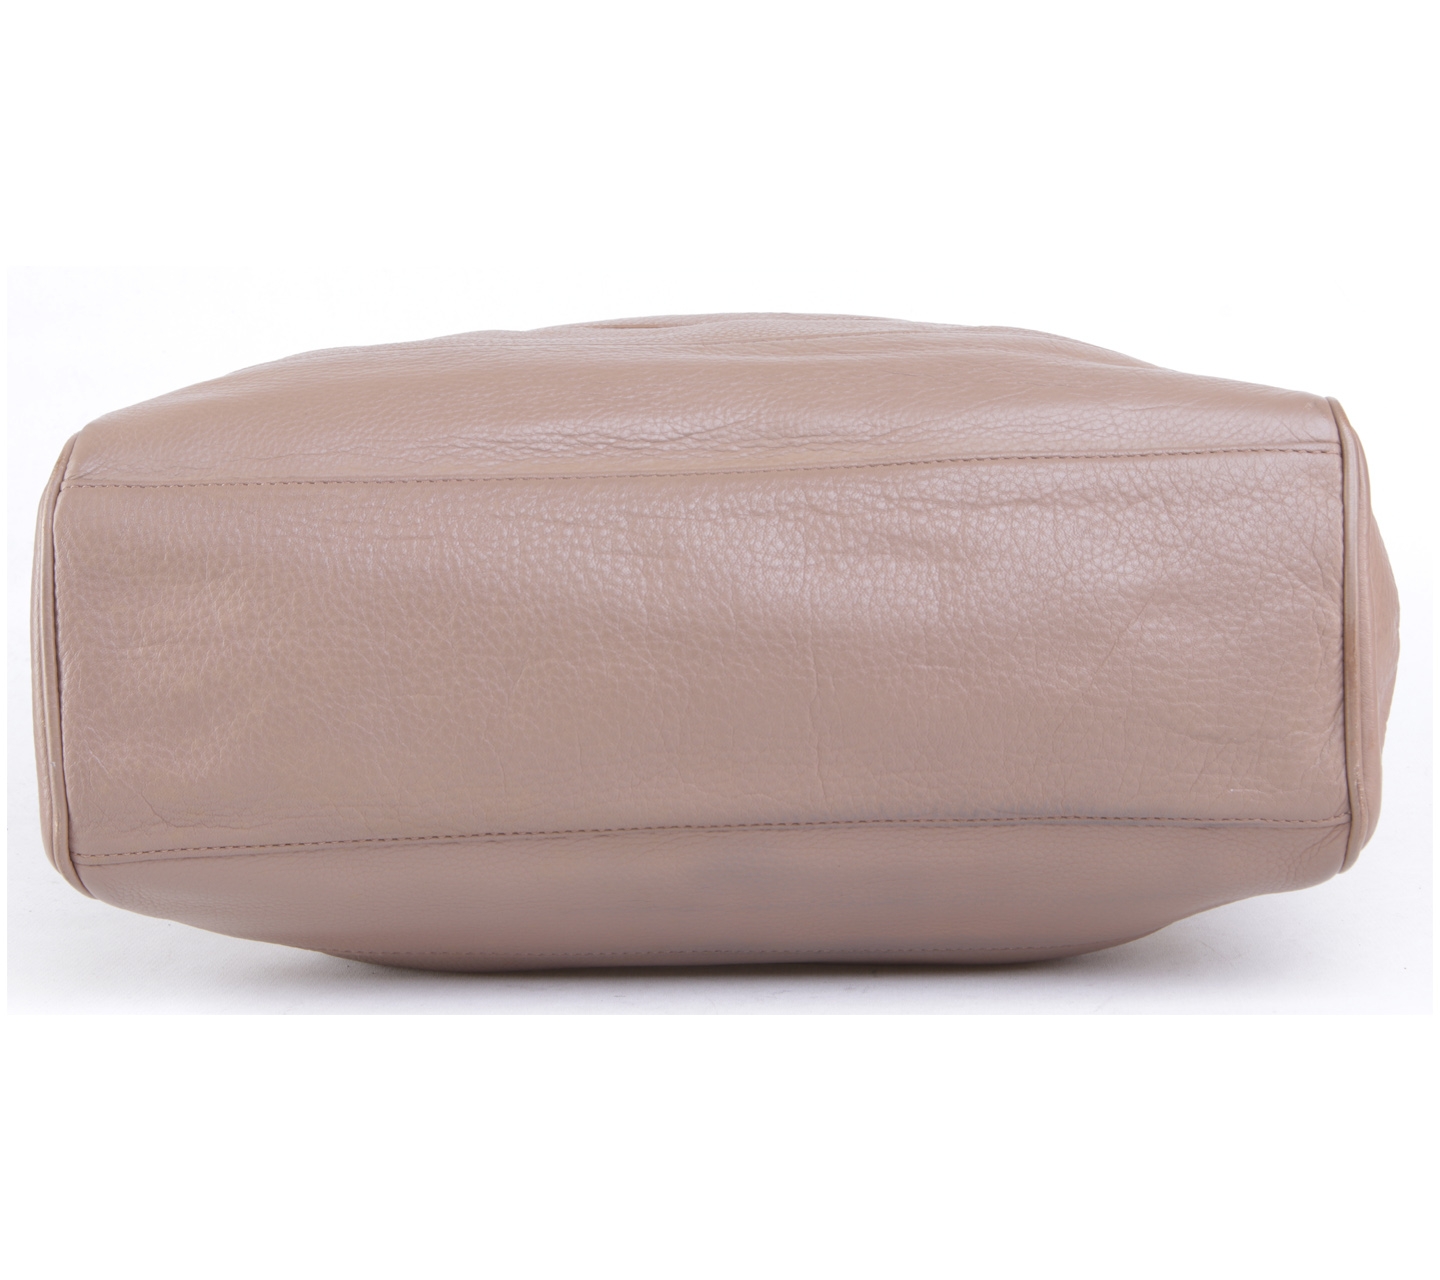 Tory Burch Brown Leather Shoulder Bag